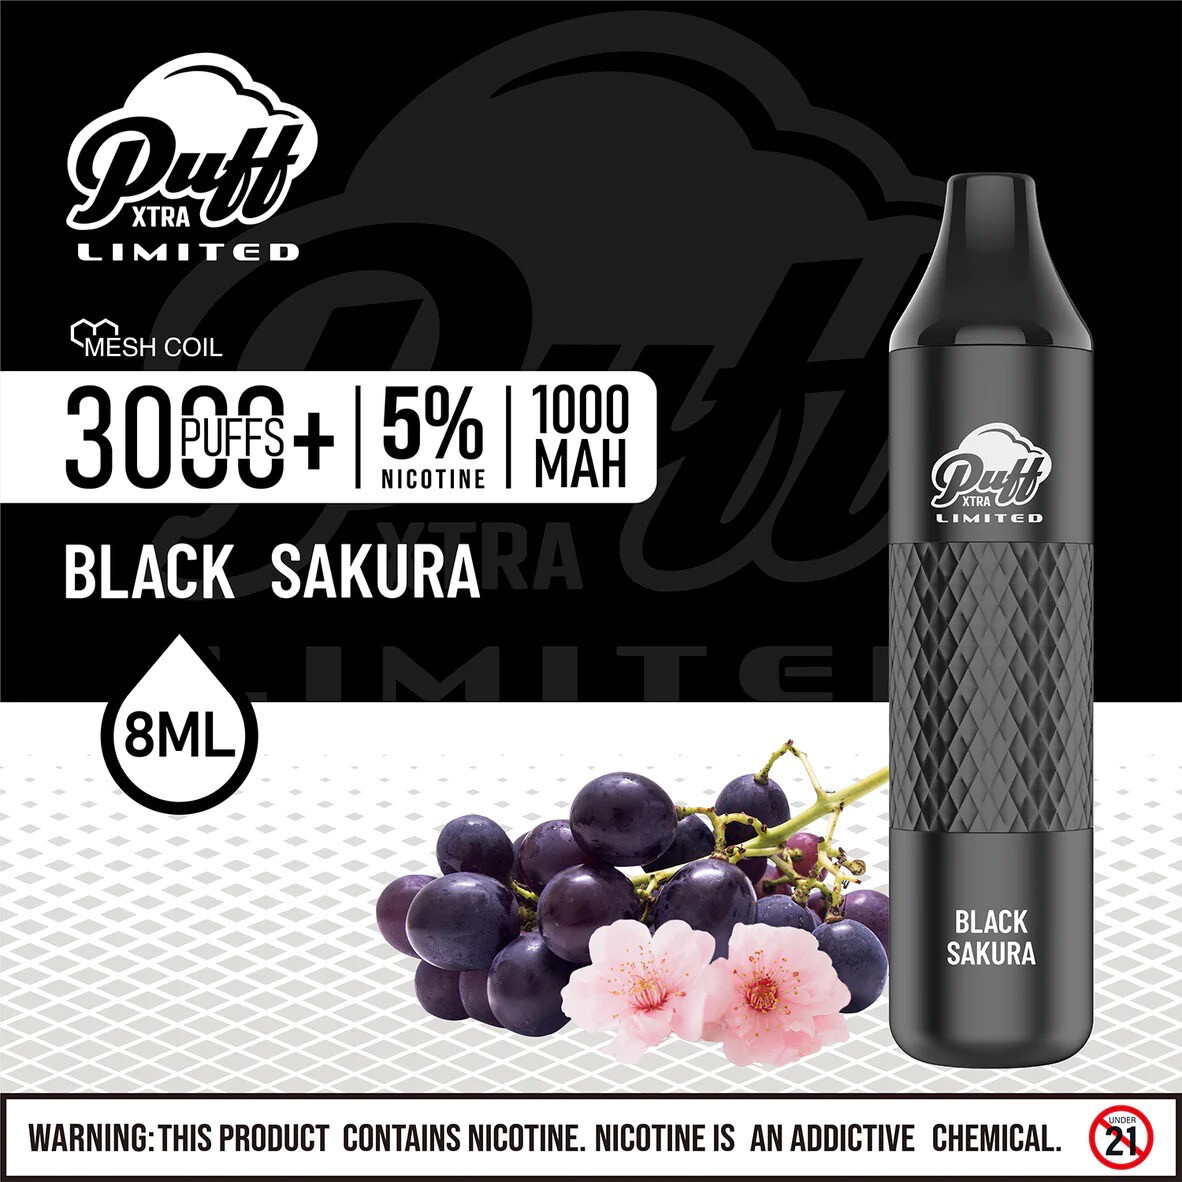 Puff Xtra Limited 5% Black Sakura